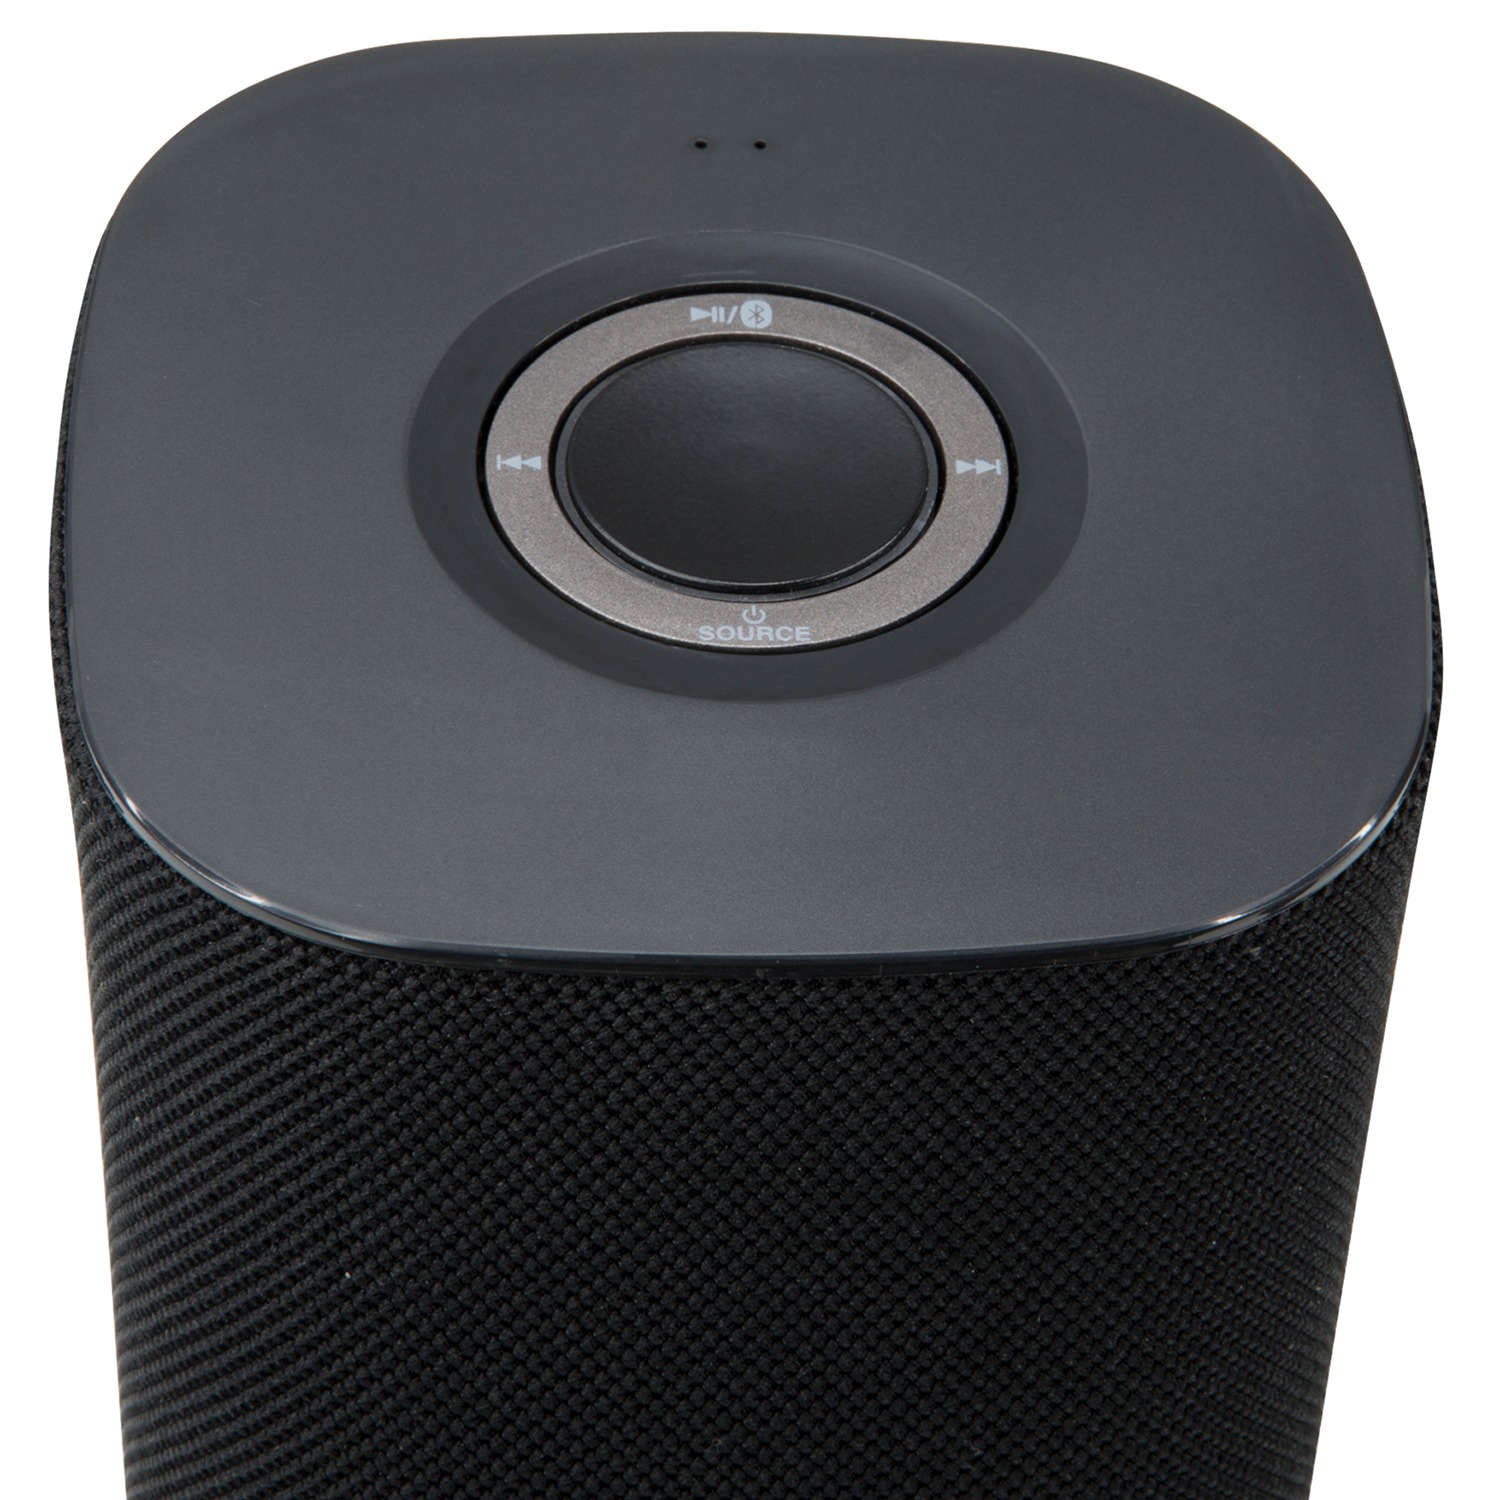 iLive Wireless Portable Fabric Speaker, ISB180B, Black - image 5 of 13